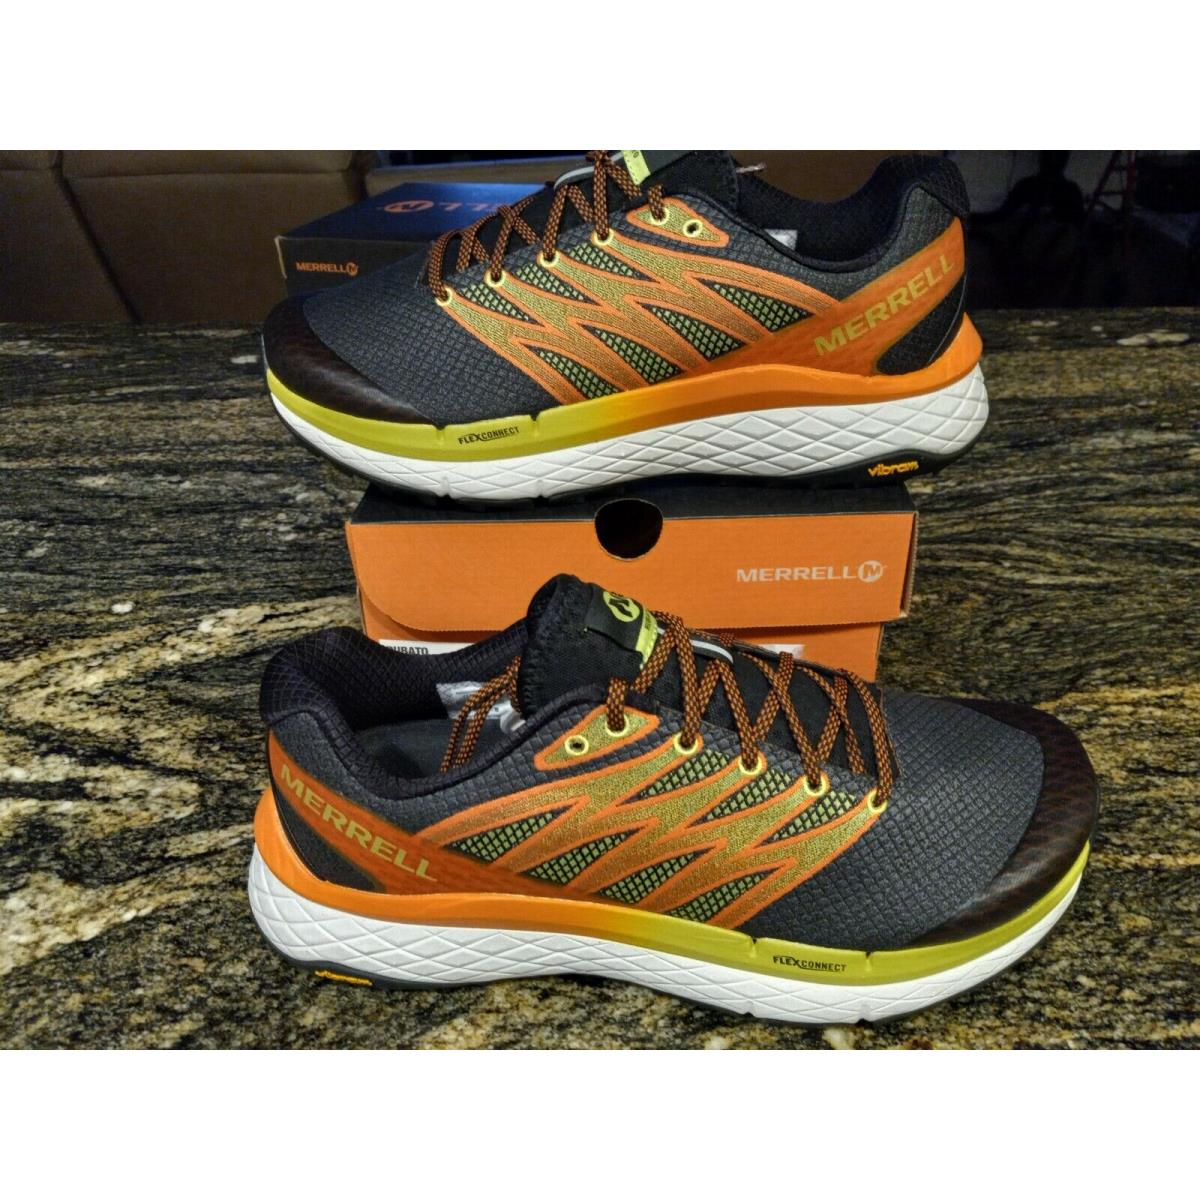 Mens Merrell Rubato Trail Running Shoes Size 10.5